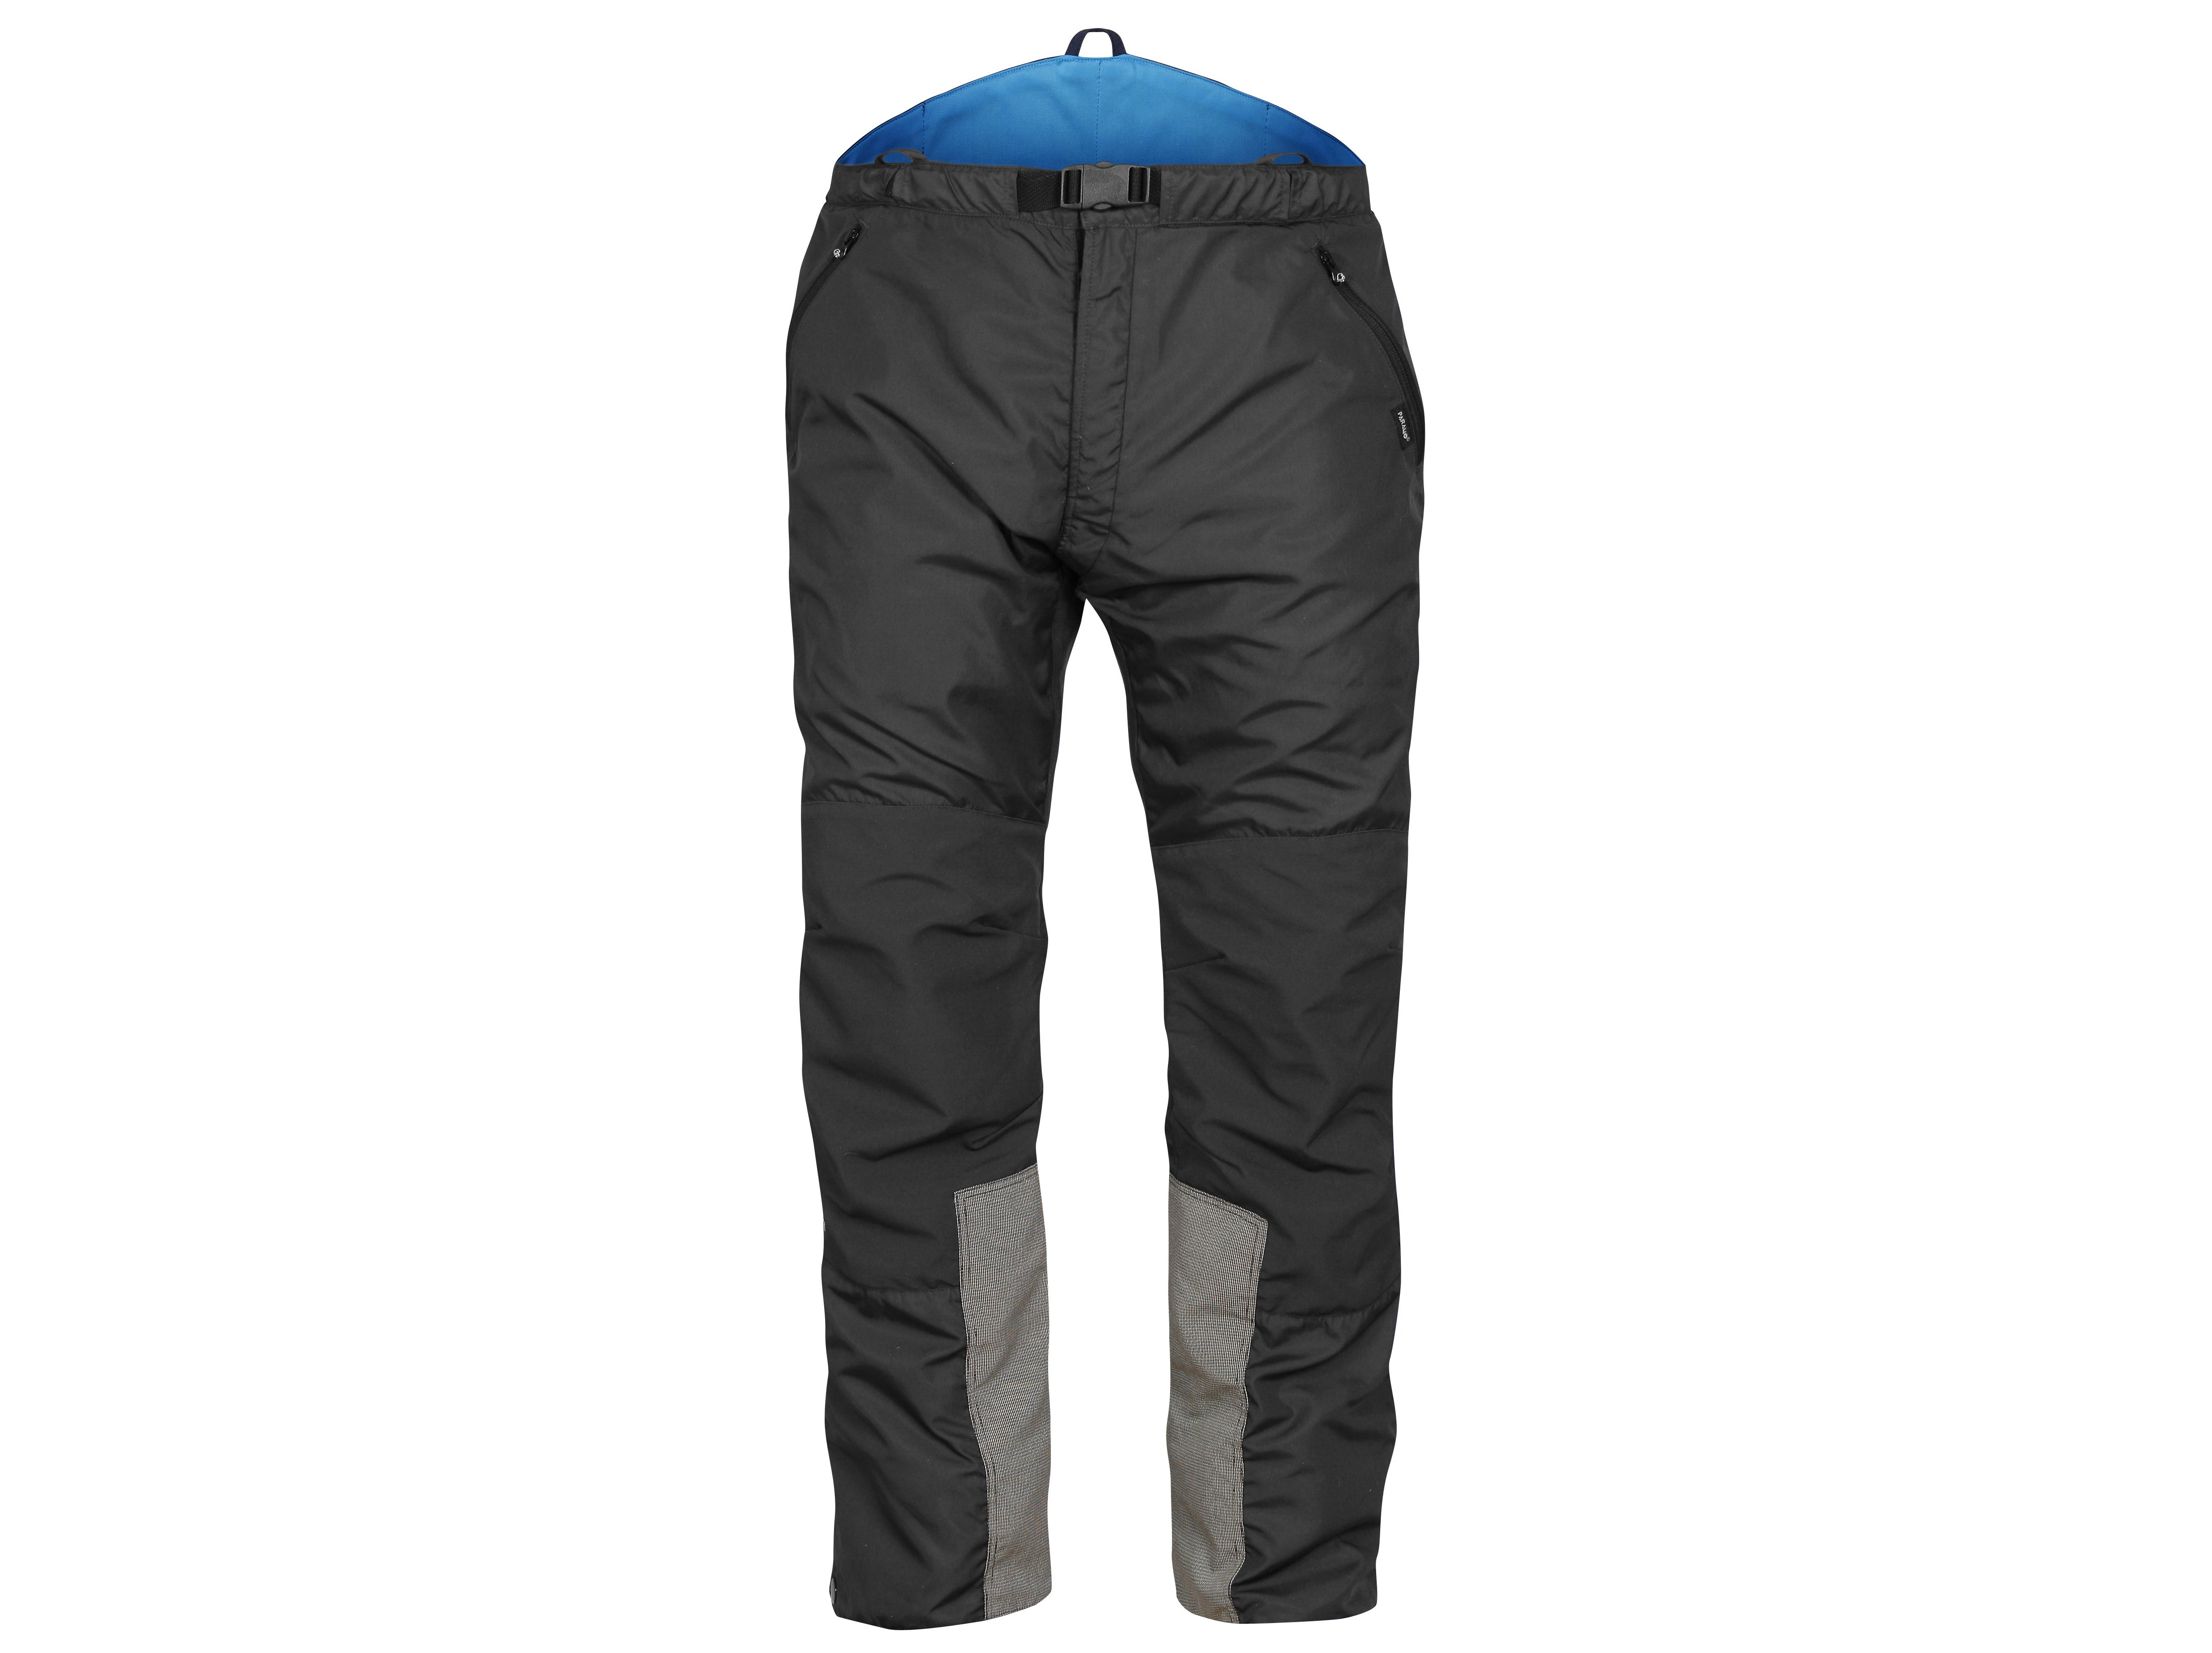 Details about   Winter Men's Denim Waterproof Ski Pants Outdoor Snowboard Windproof Trousers 